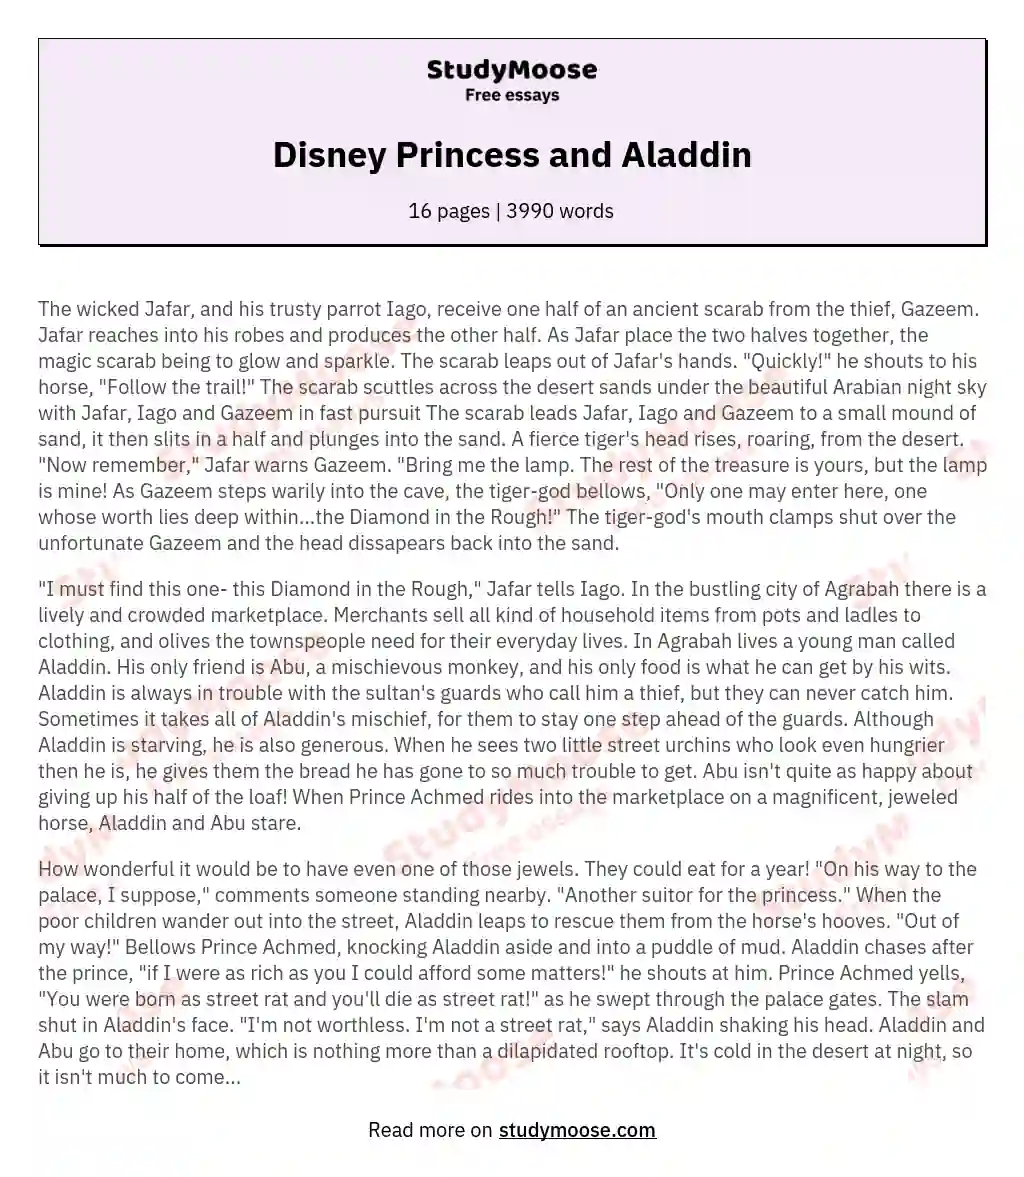 Disney Princess and Aladdin essay